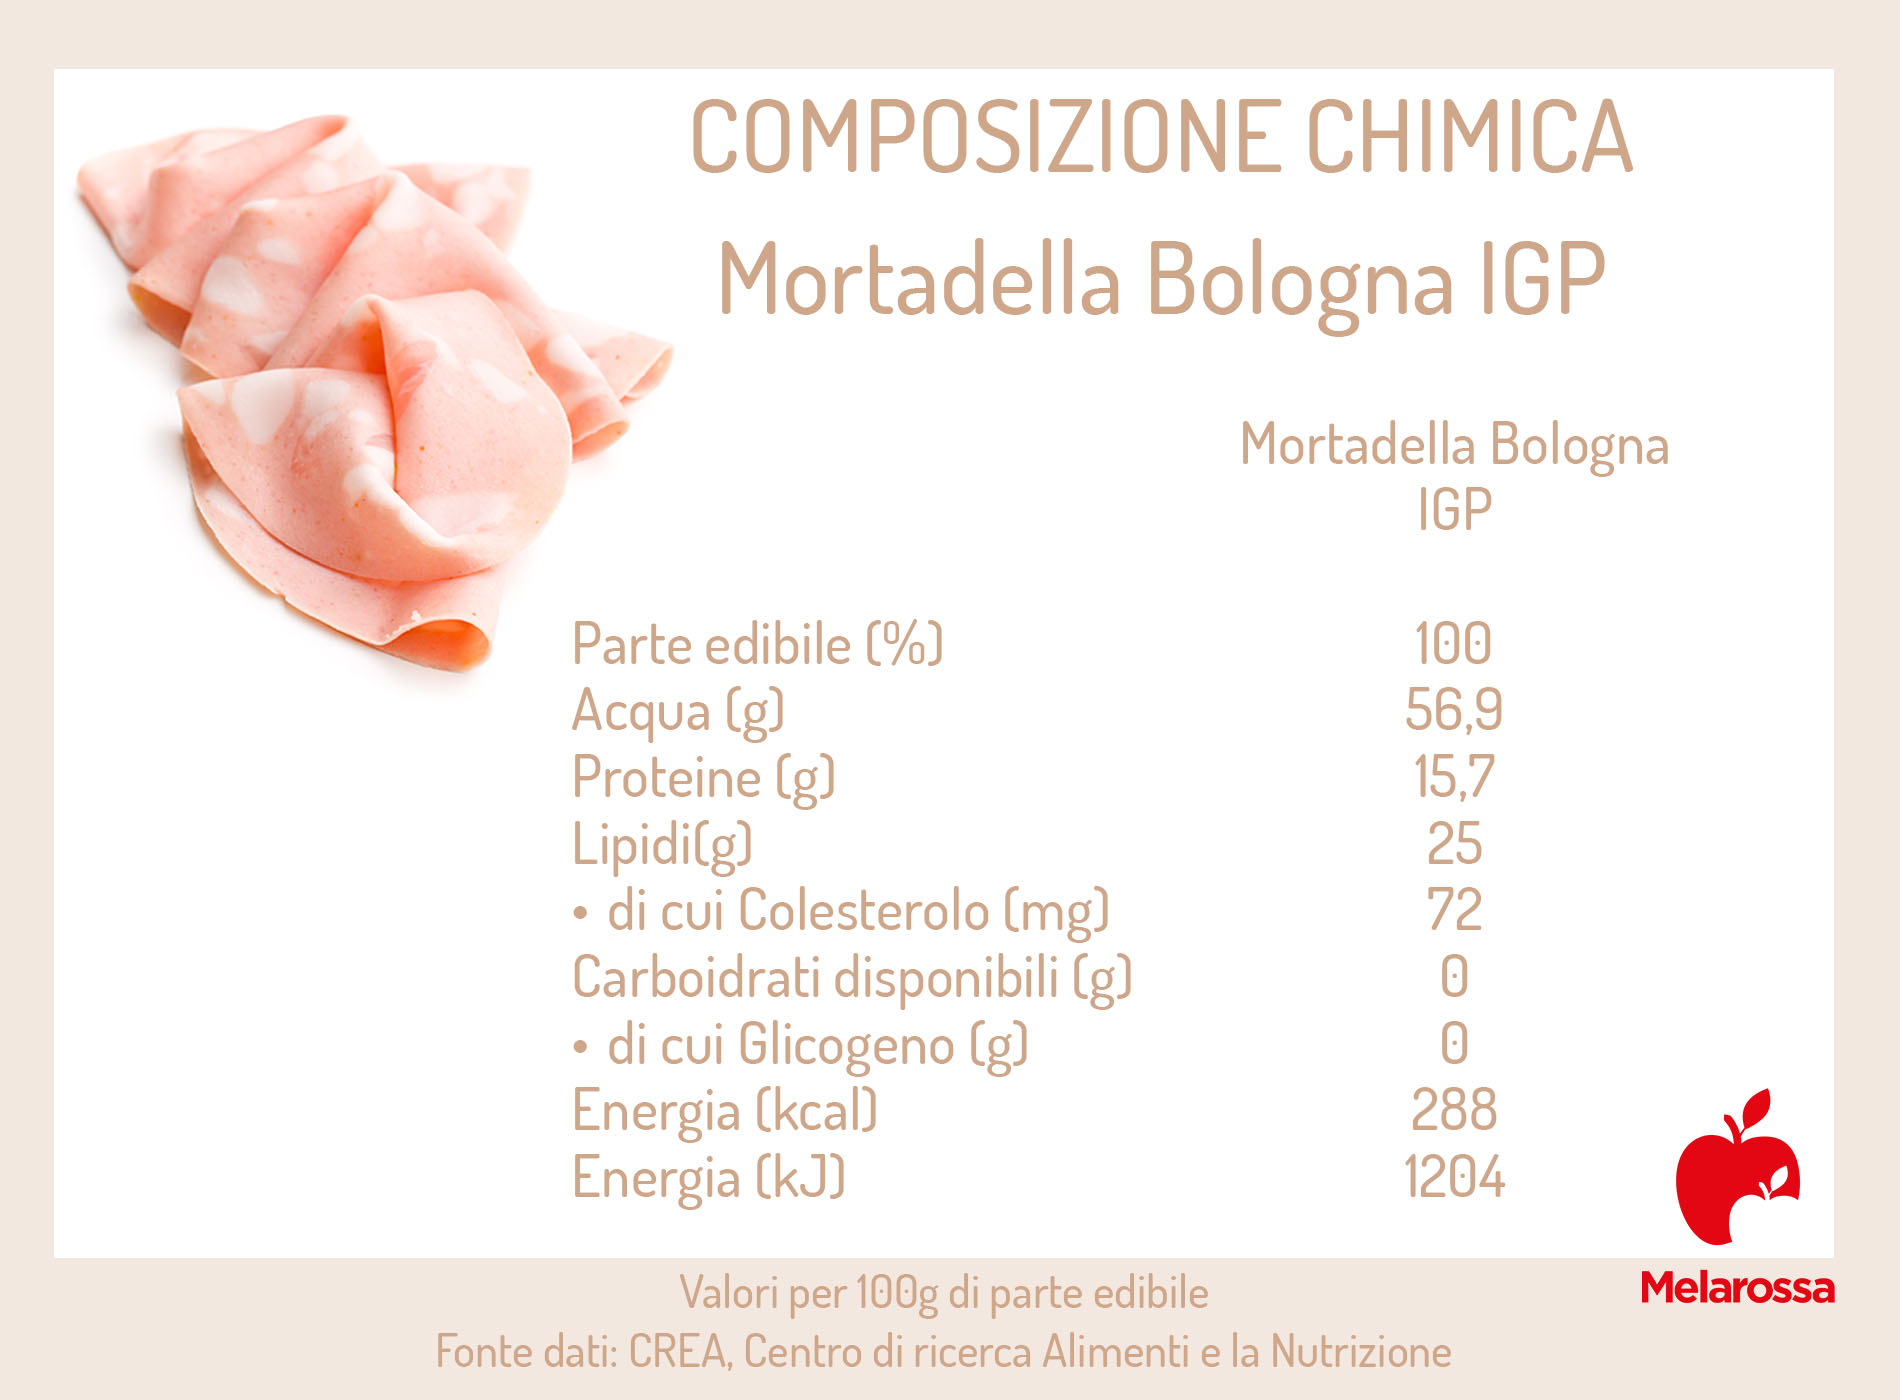 Mortadella Bologna IGP: calorie 